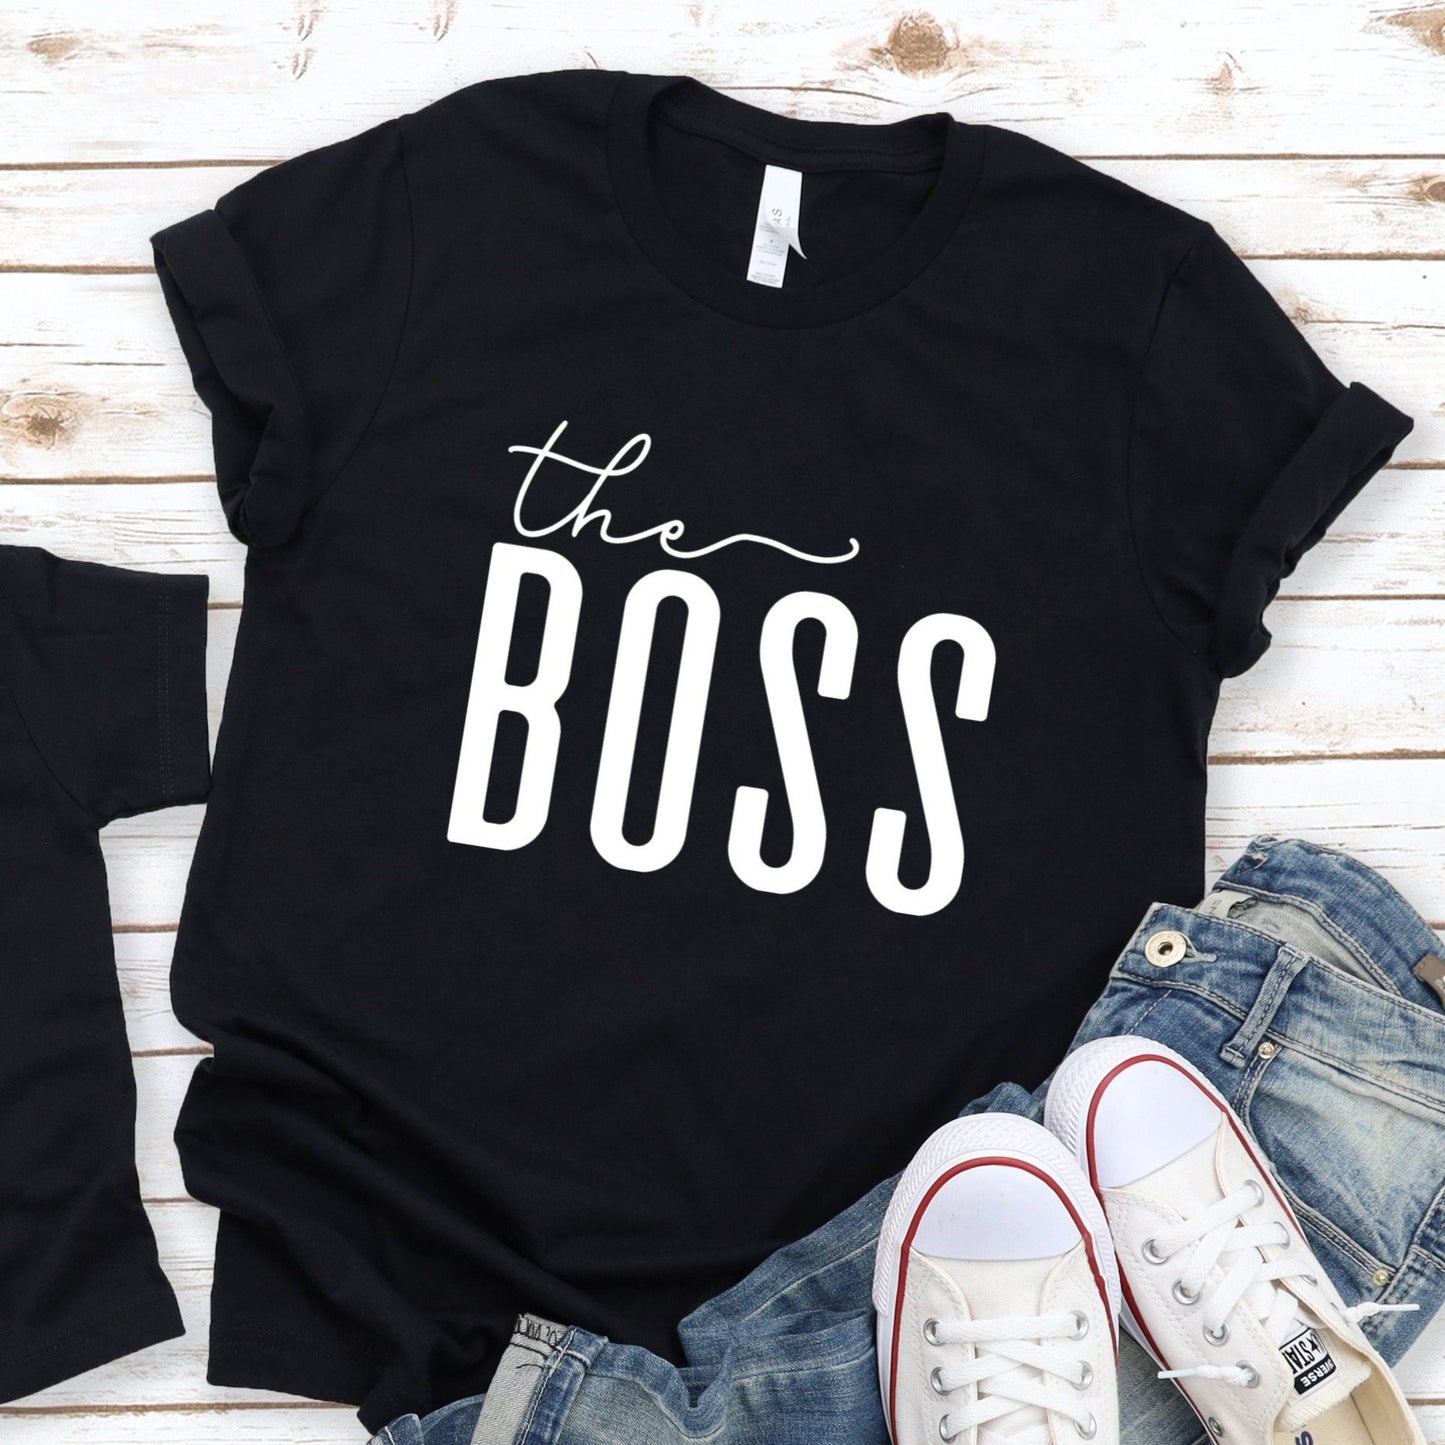 The Boss / The Real Boss Shirt